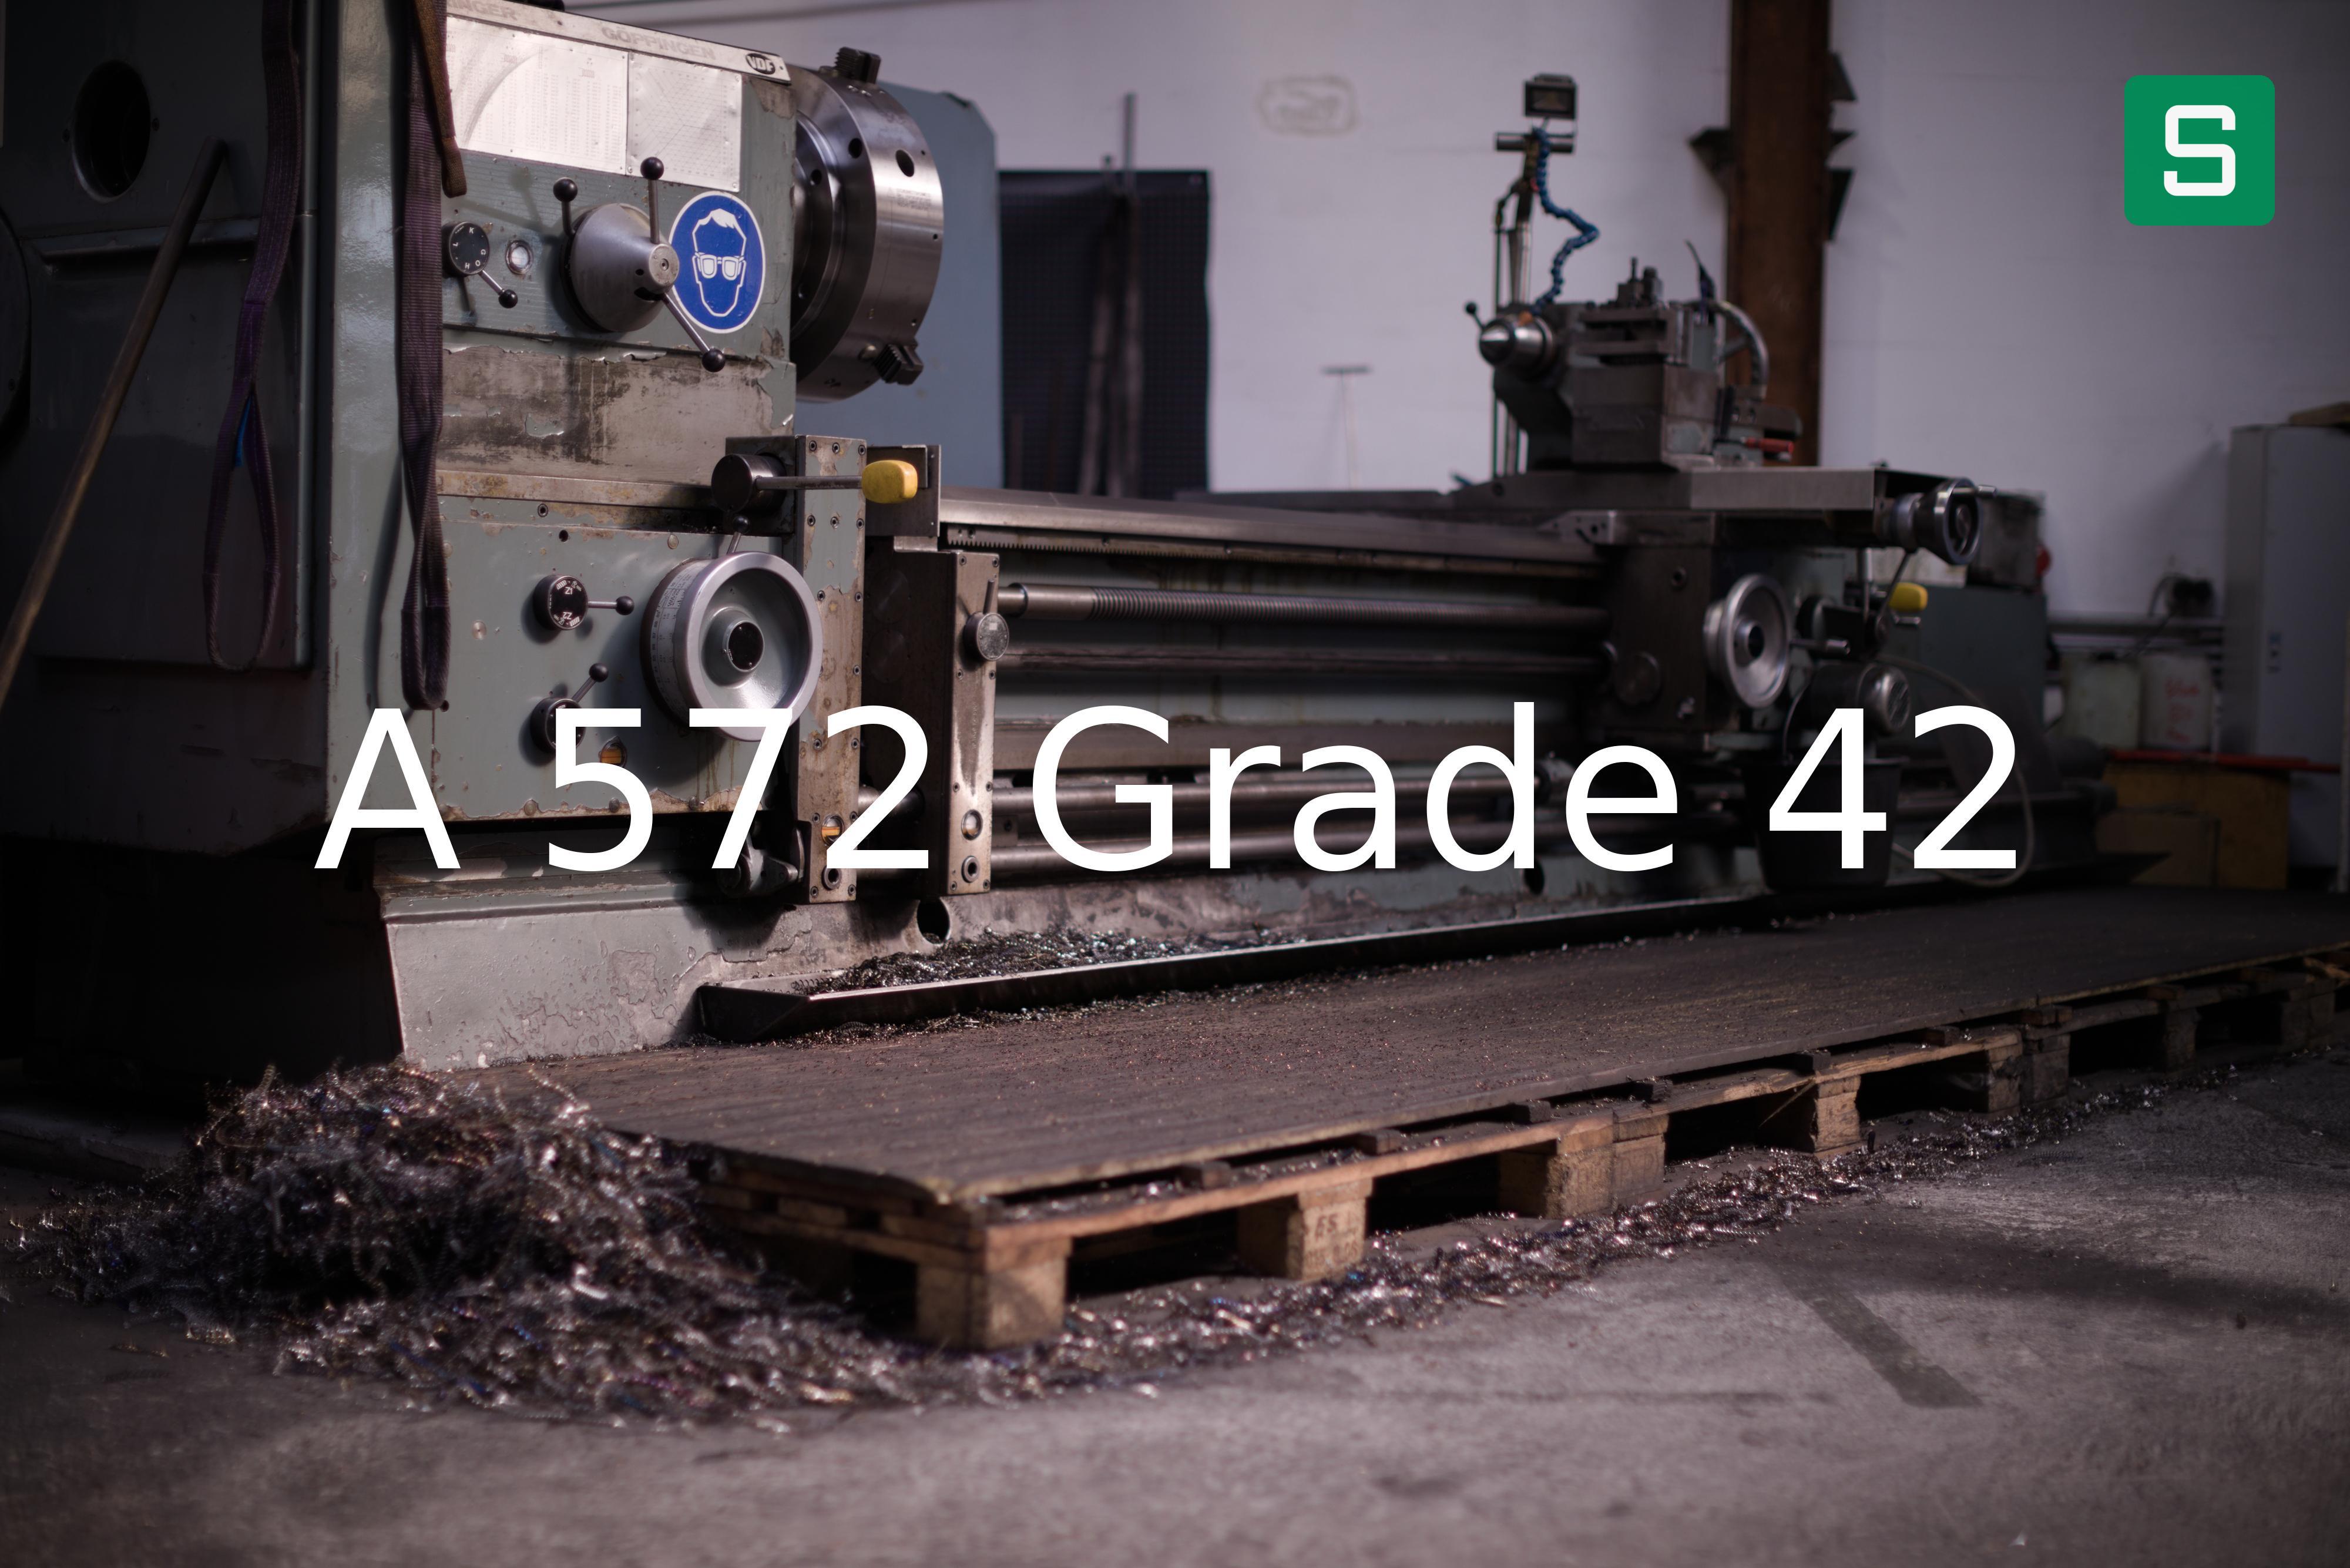 Steel Material: A 572 Grade 42